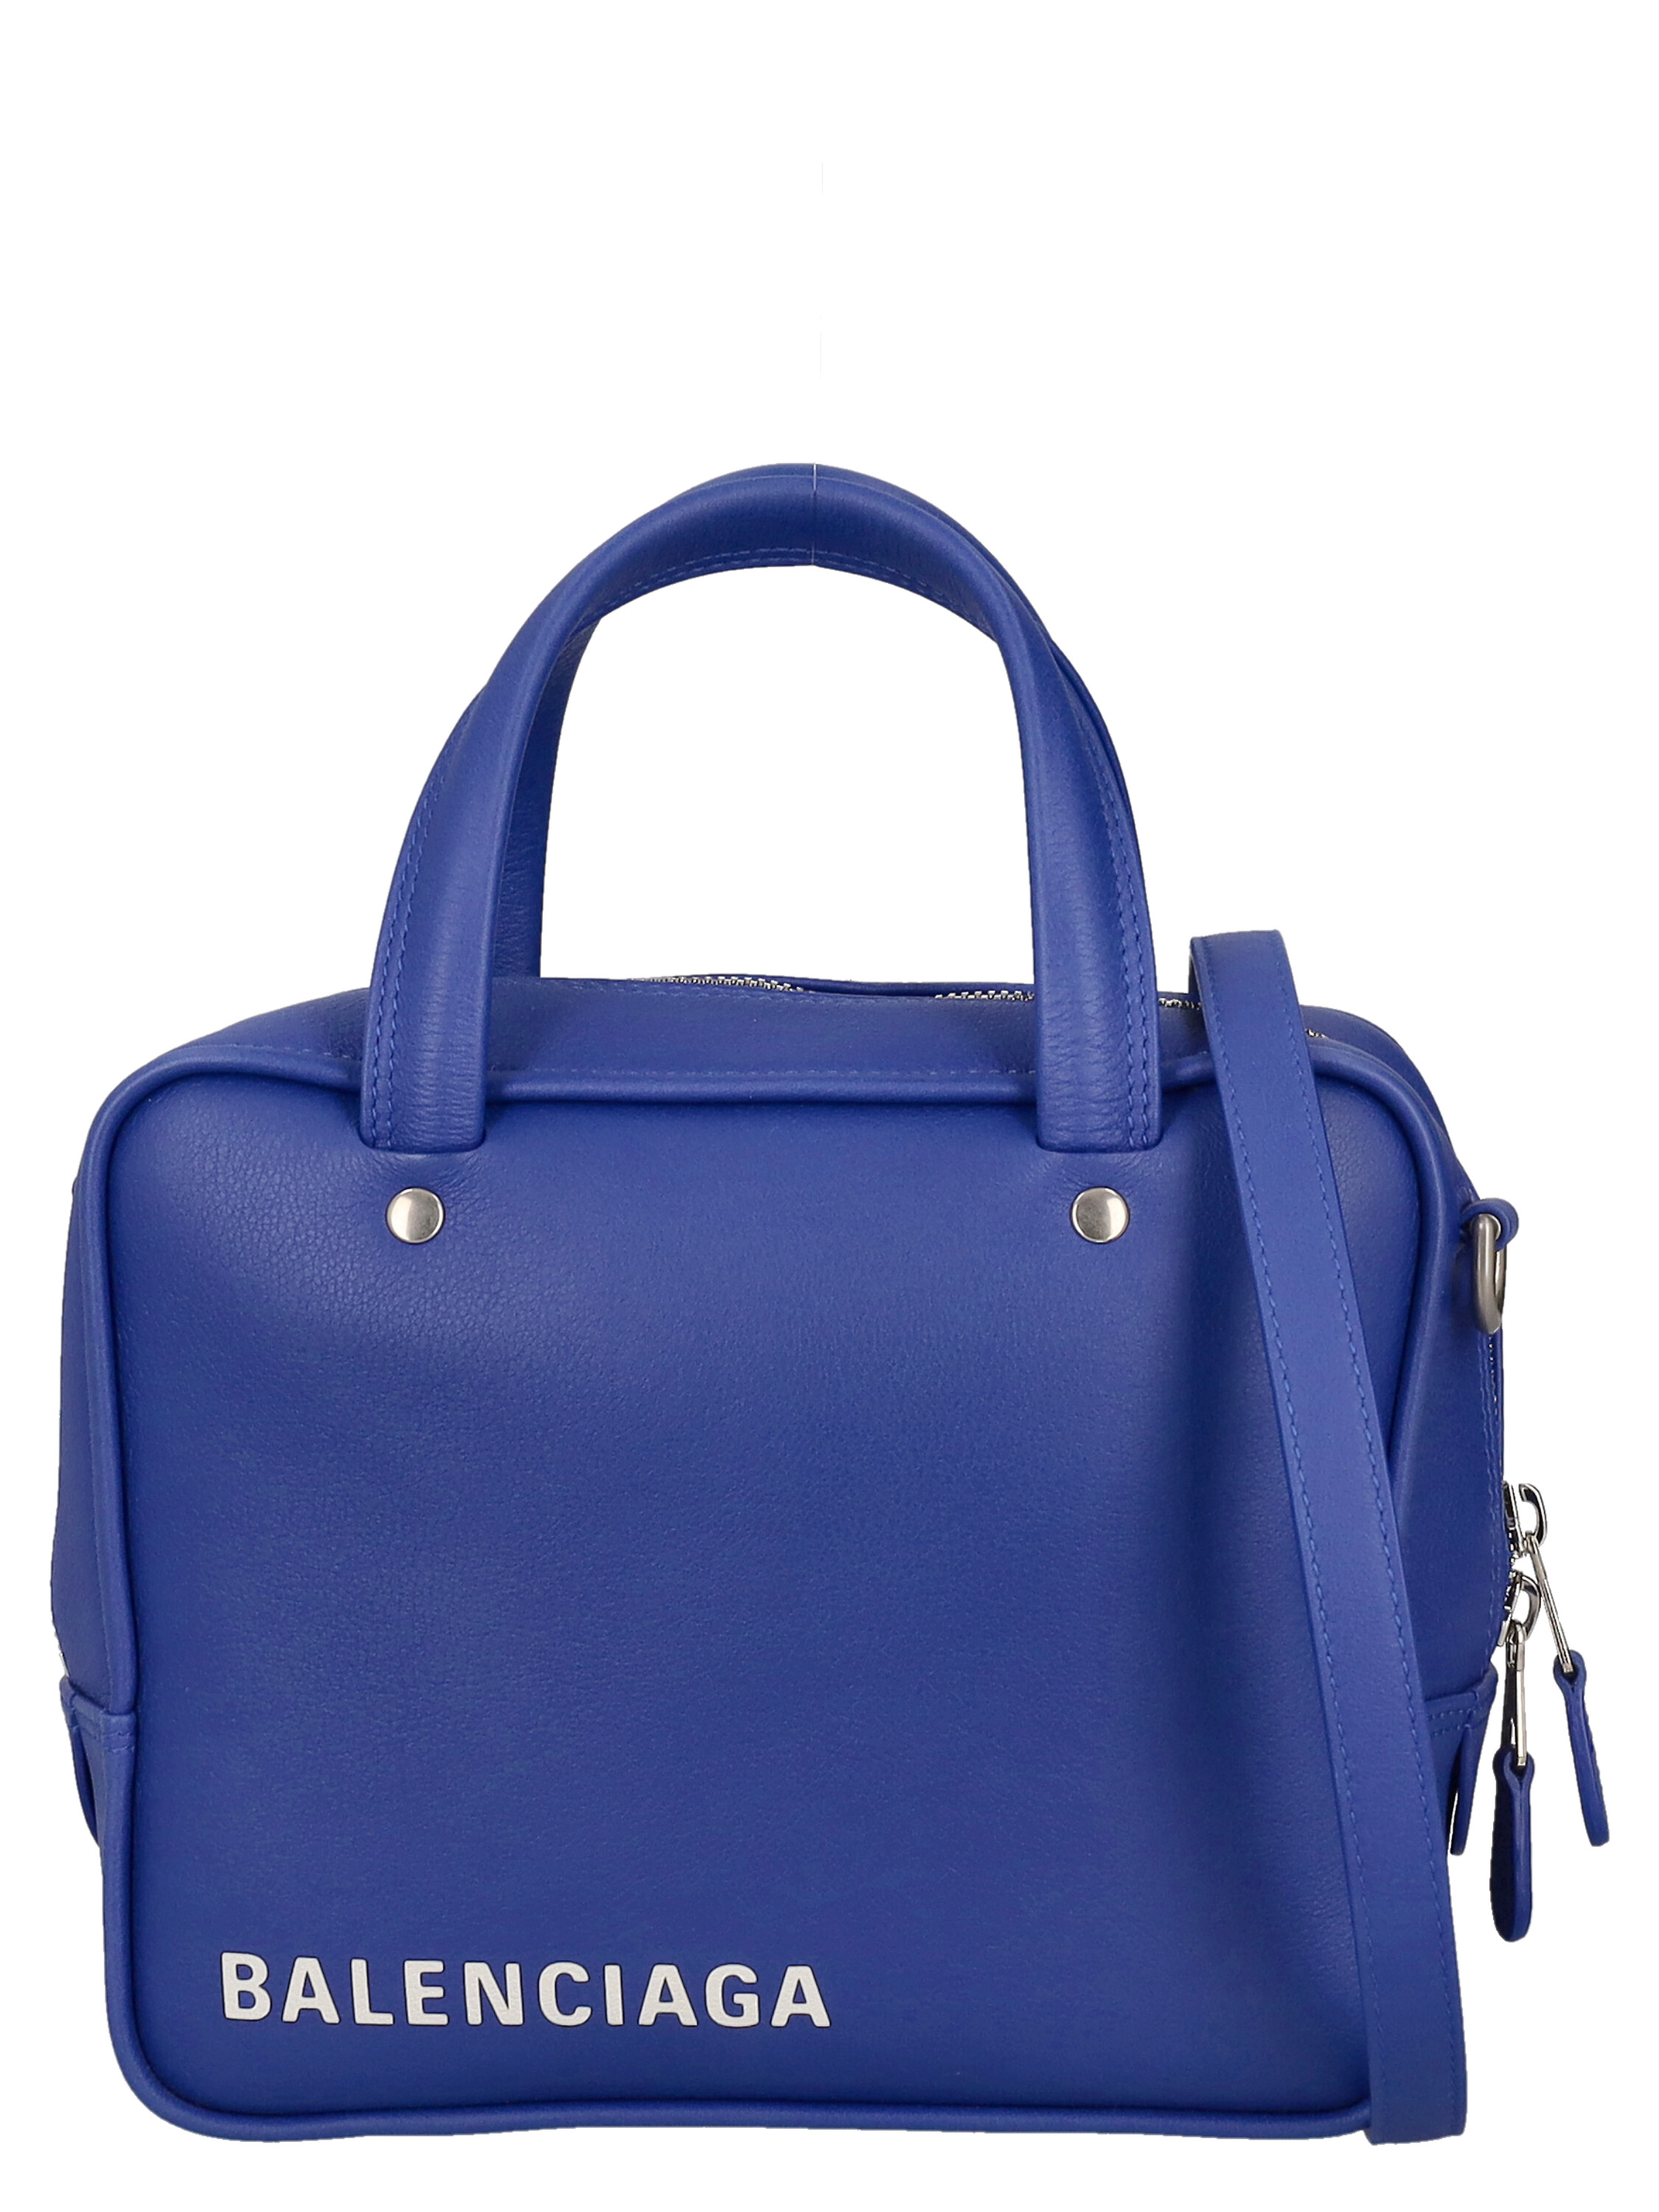 Pre-owned Balenciaga Women's Handbags -  - In Navy Leather